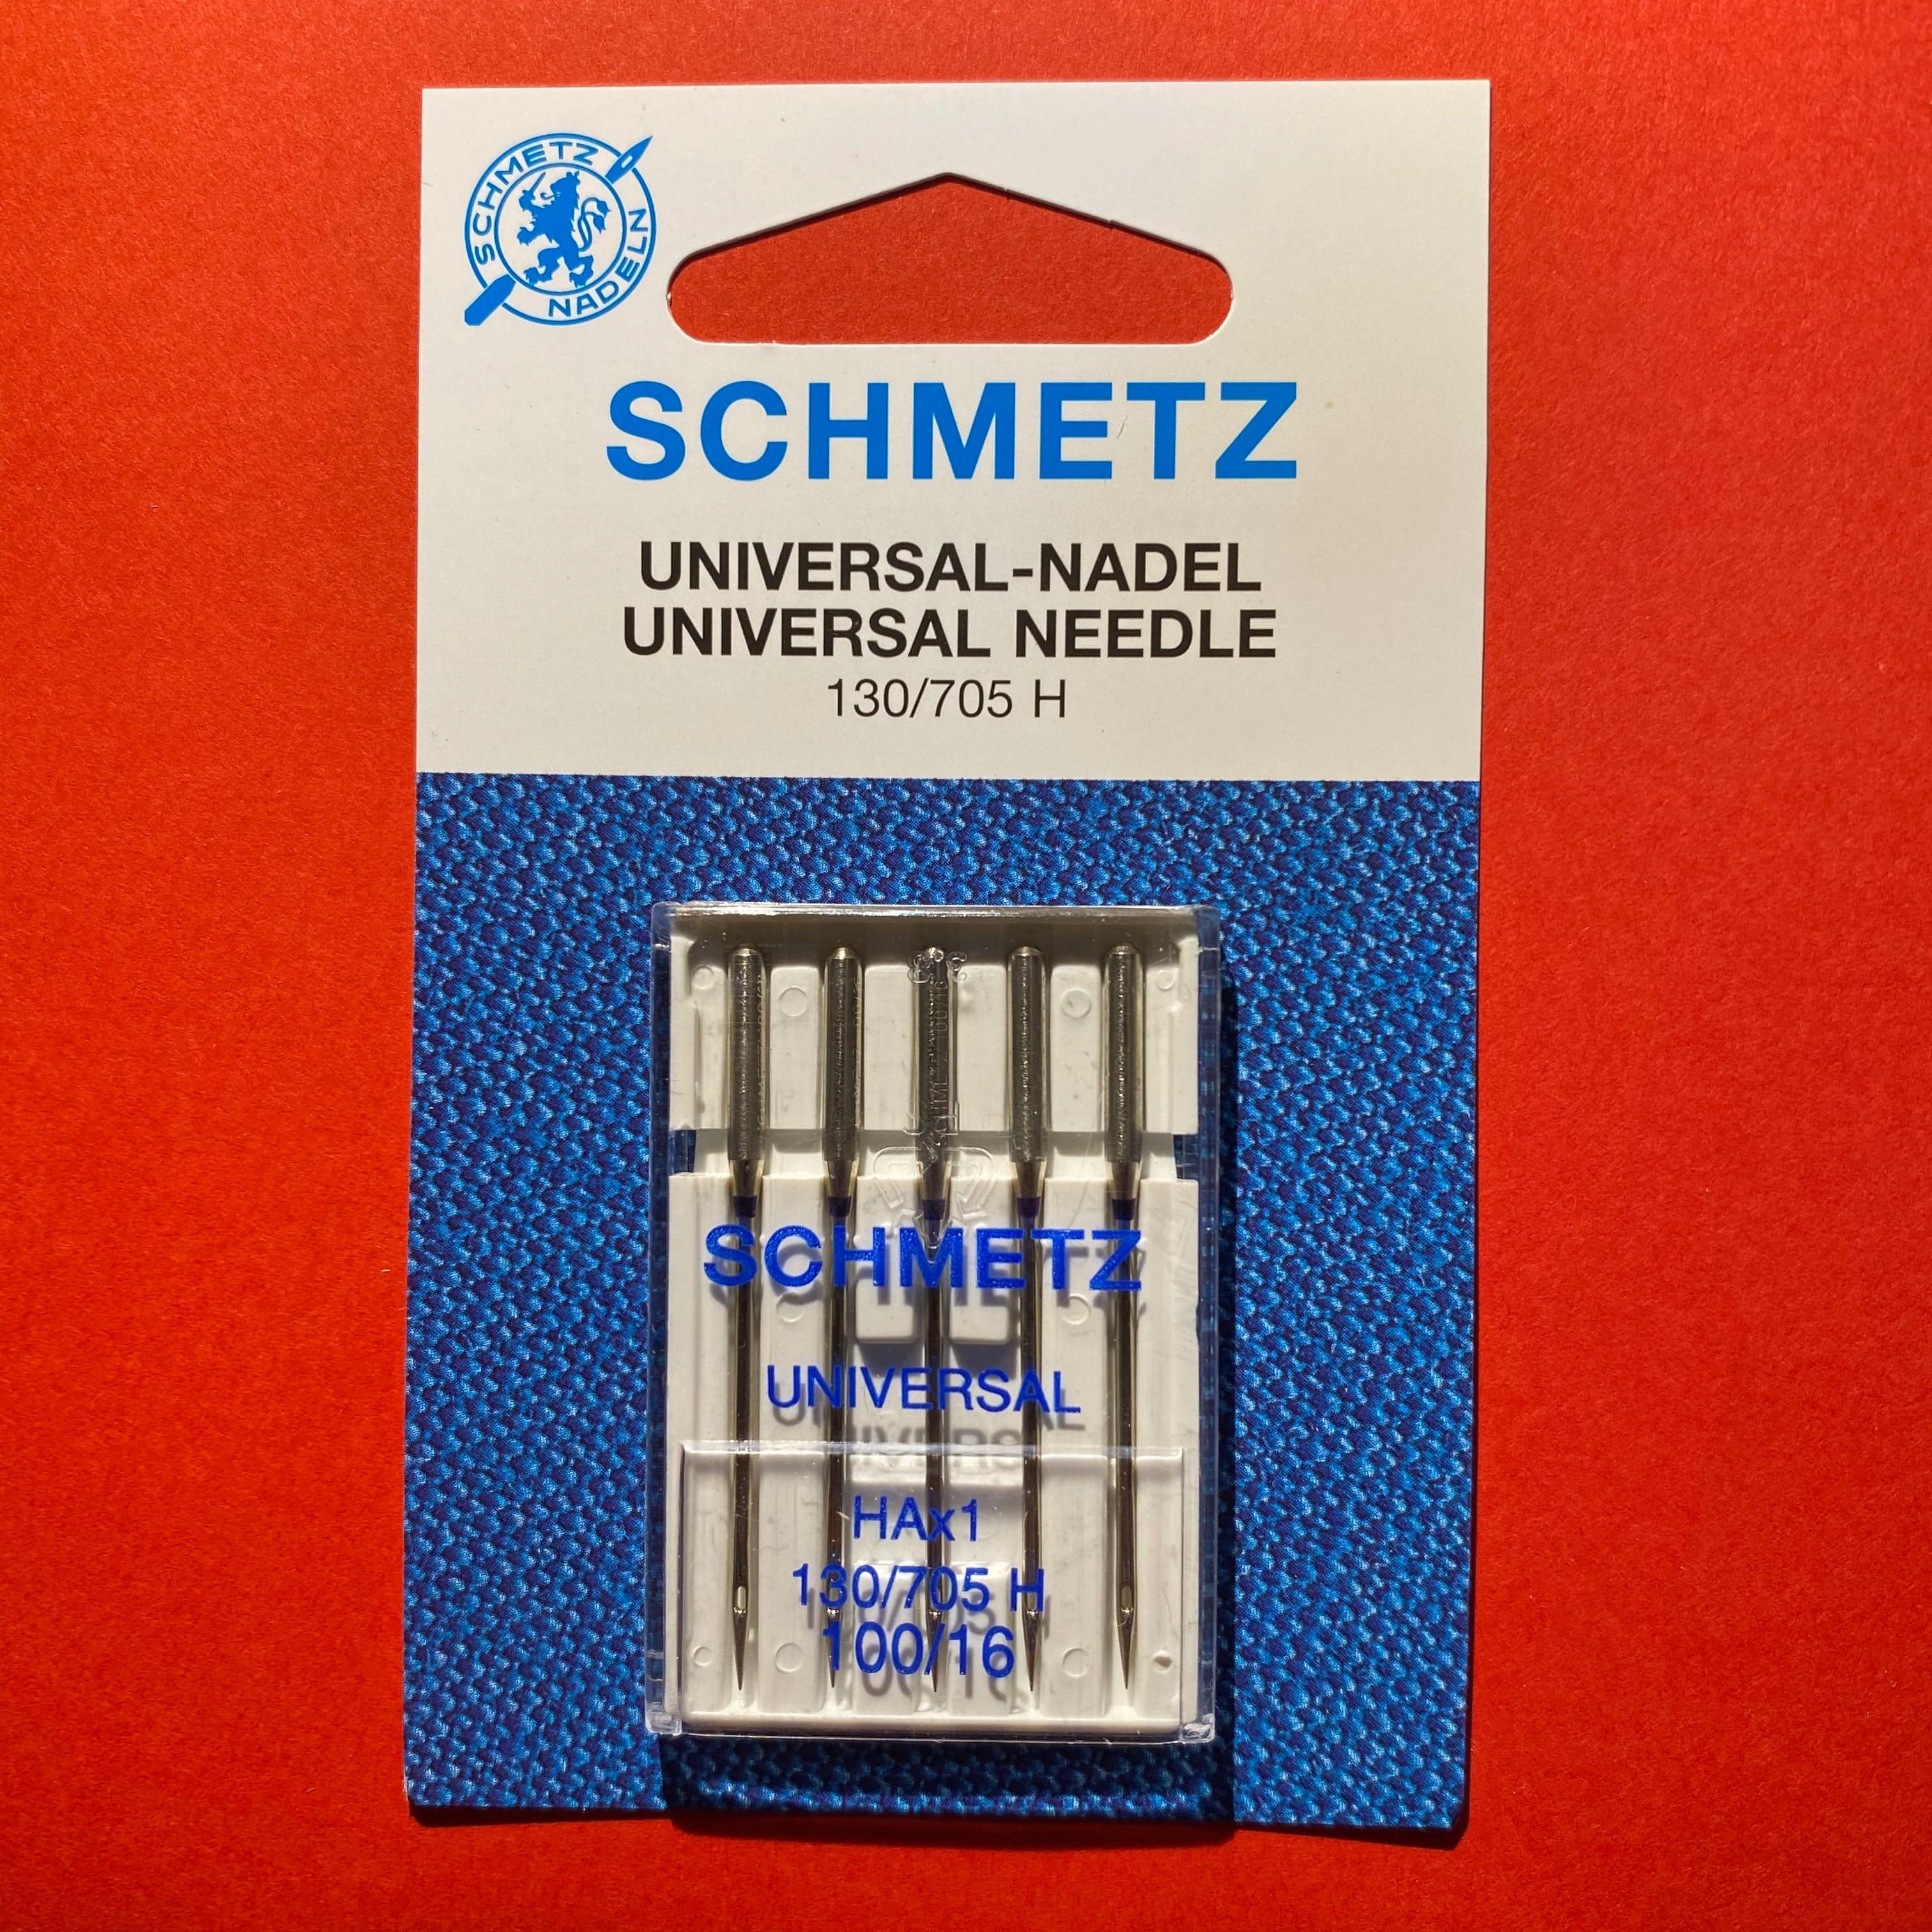 Schmetz Universal Needles 130/705 H 100/16 Medium to Heavy-weight - 5 pack